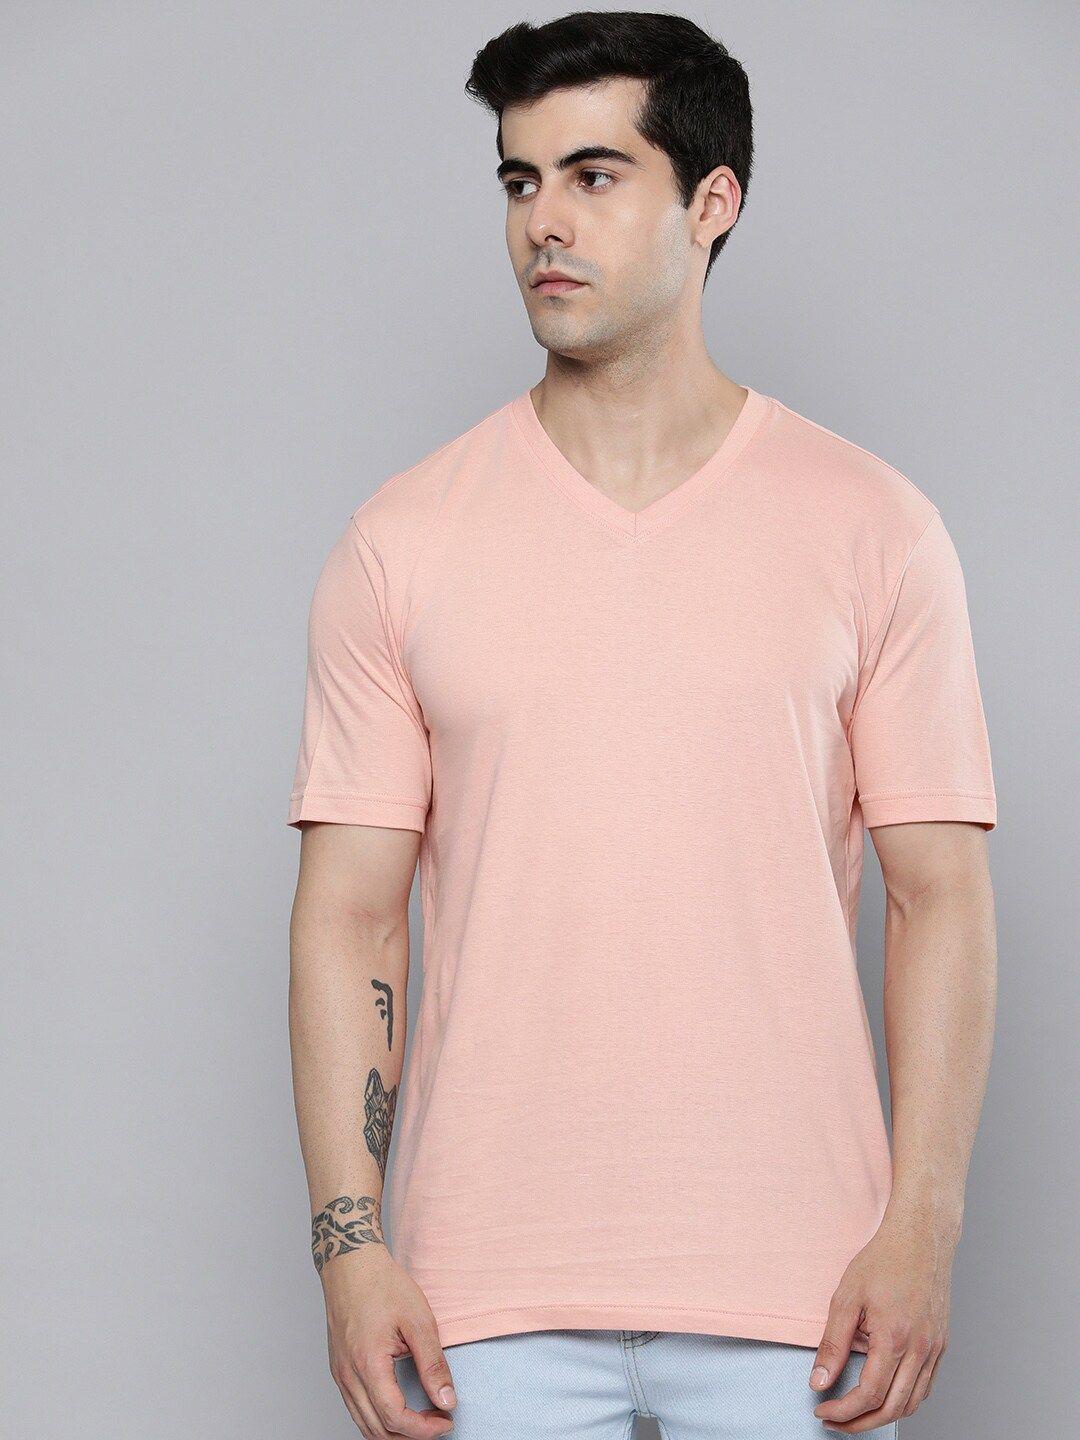 mast & harbour peach coloured v-neck cotton t-shirt